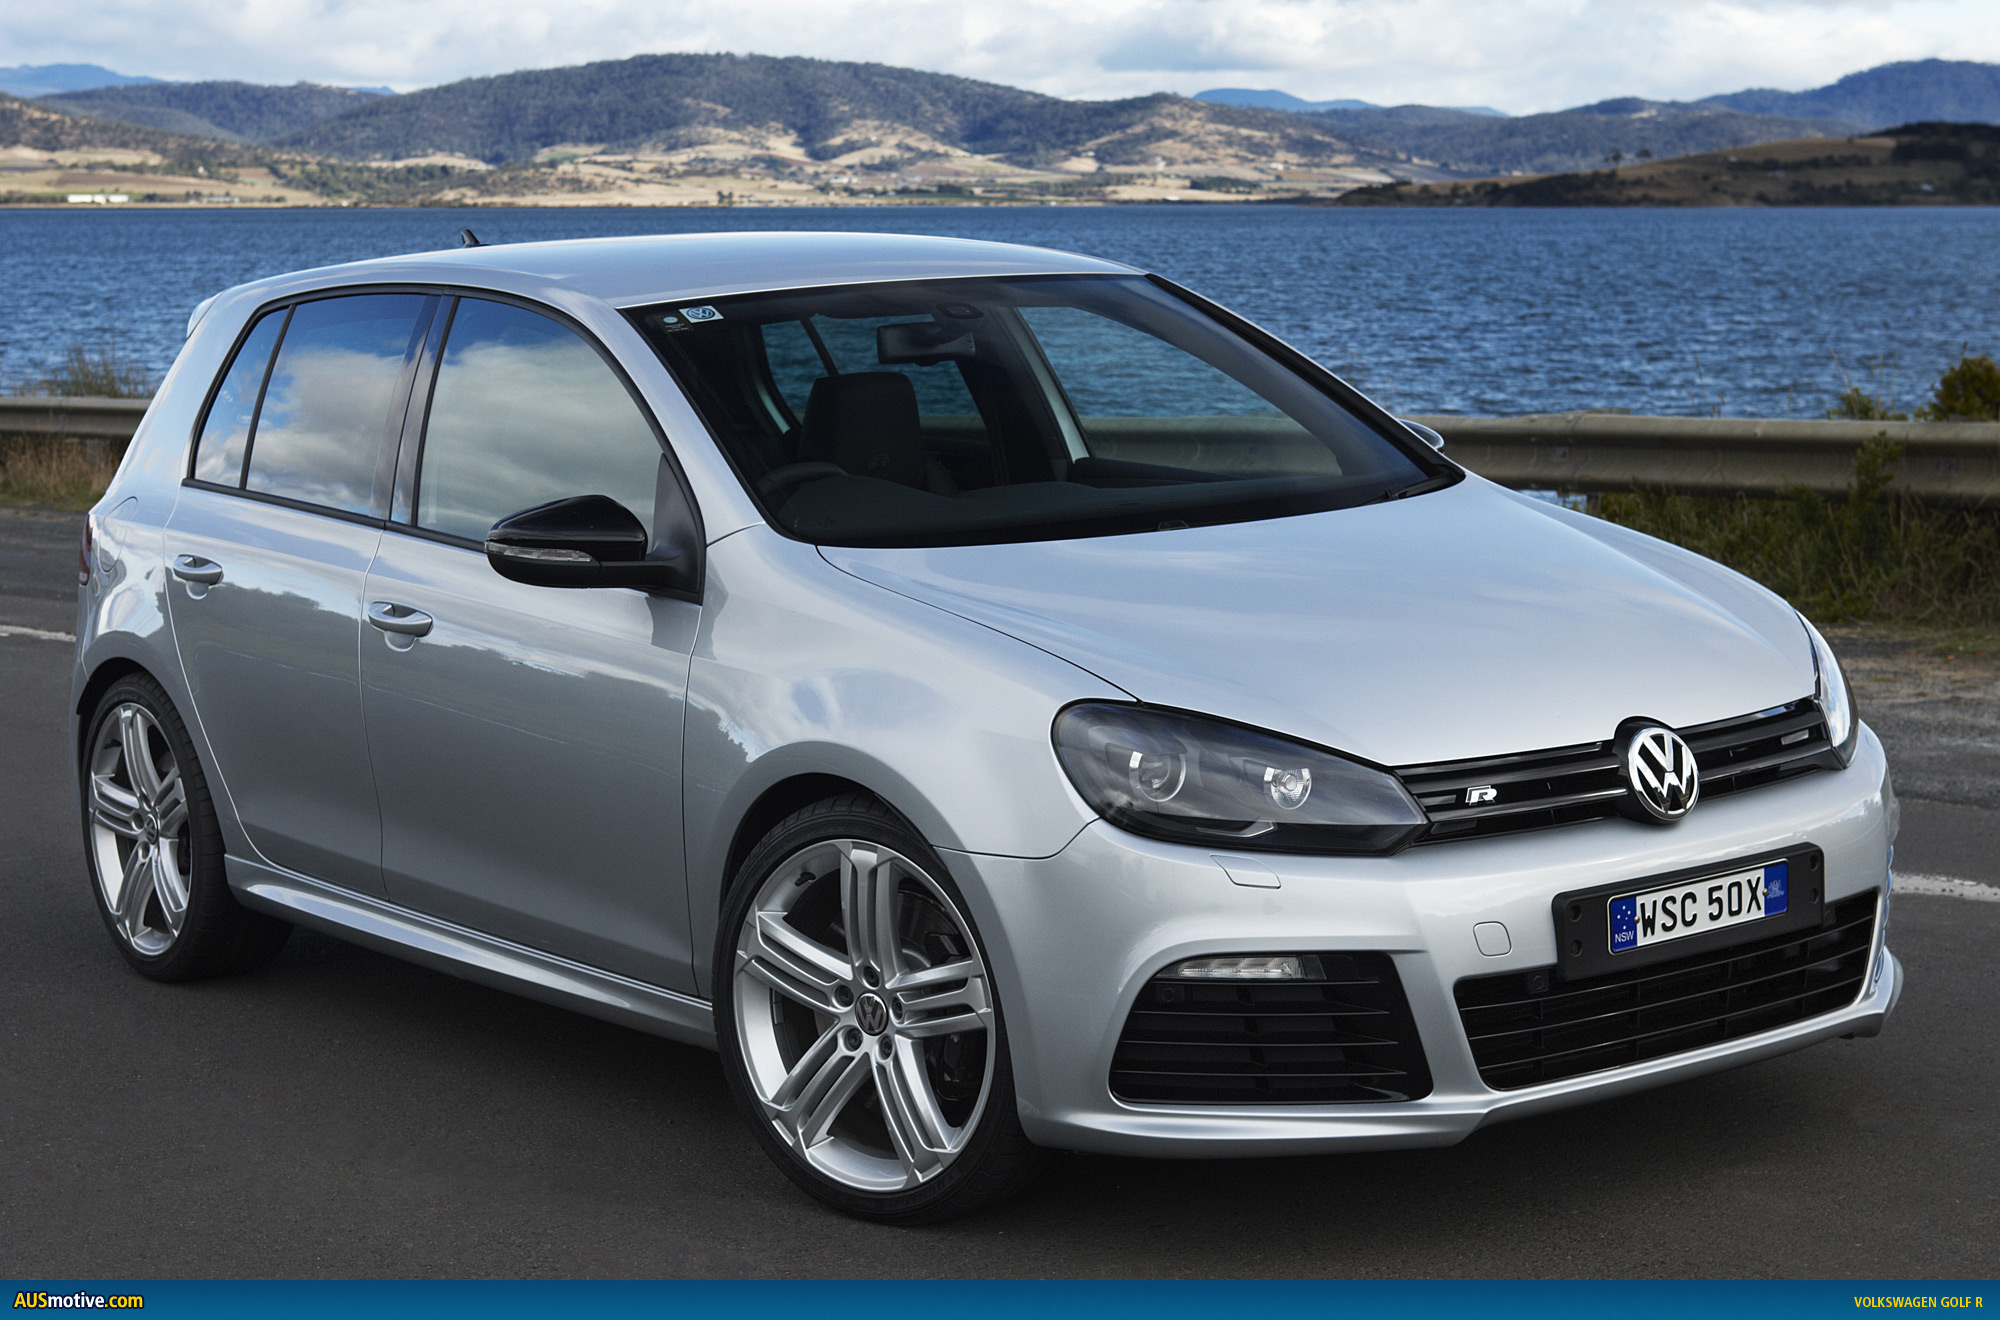 Volkswagen Golf R Detailed Australian Press Release